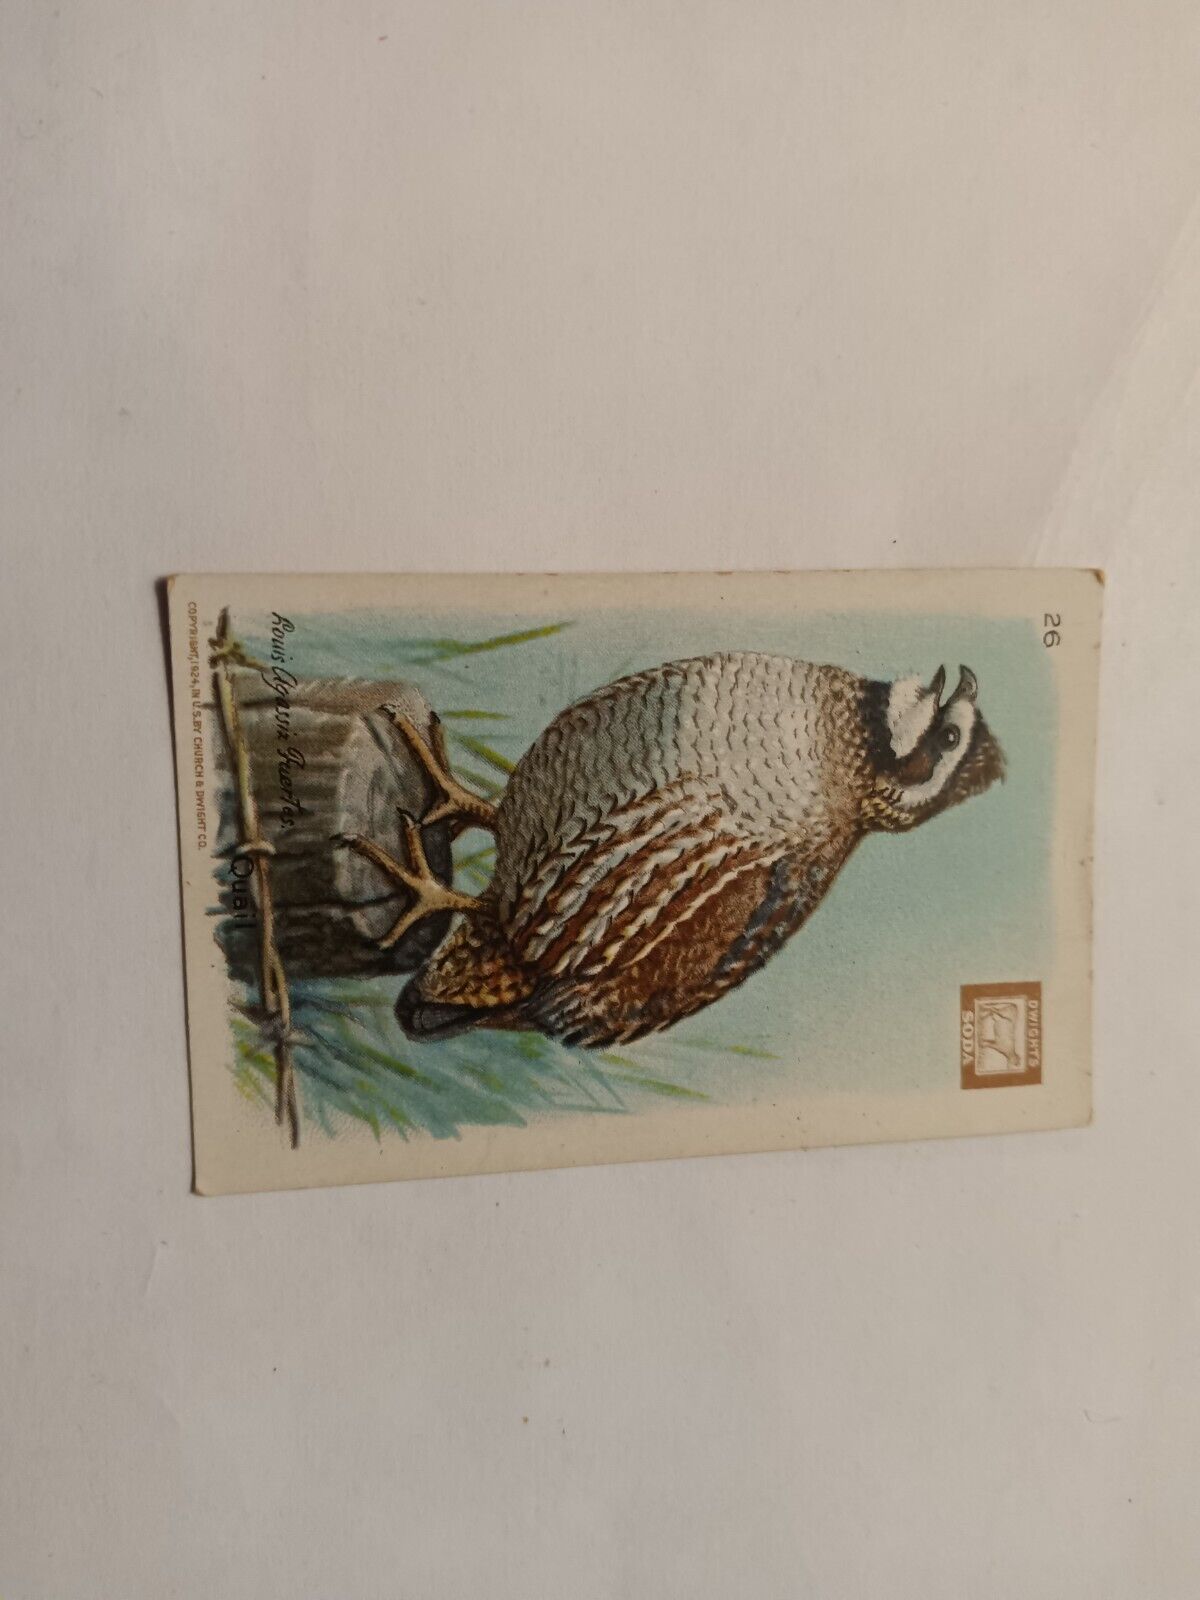 Vintage Church & Dwight's Soda Birds Series 4 Card No 26 Quail